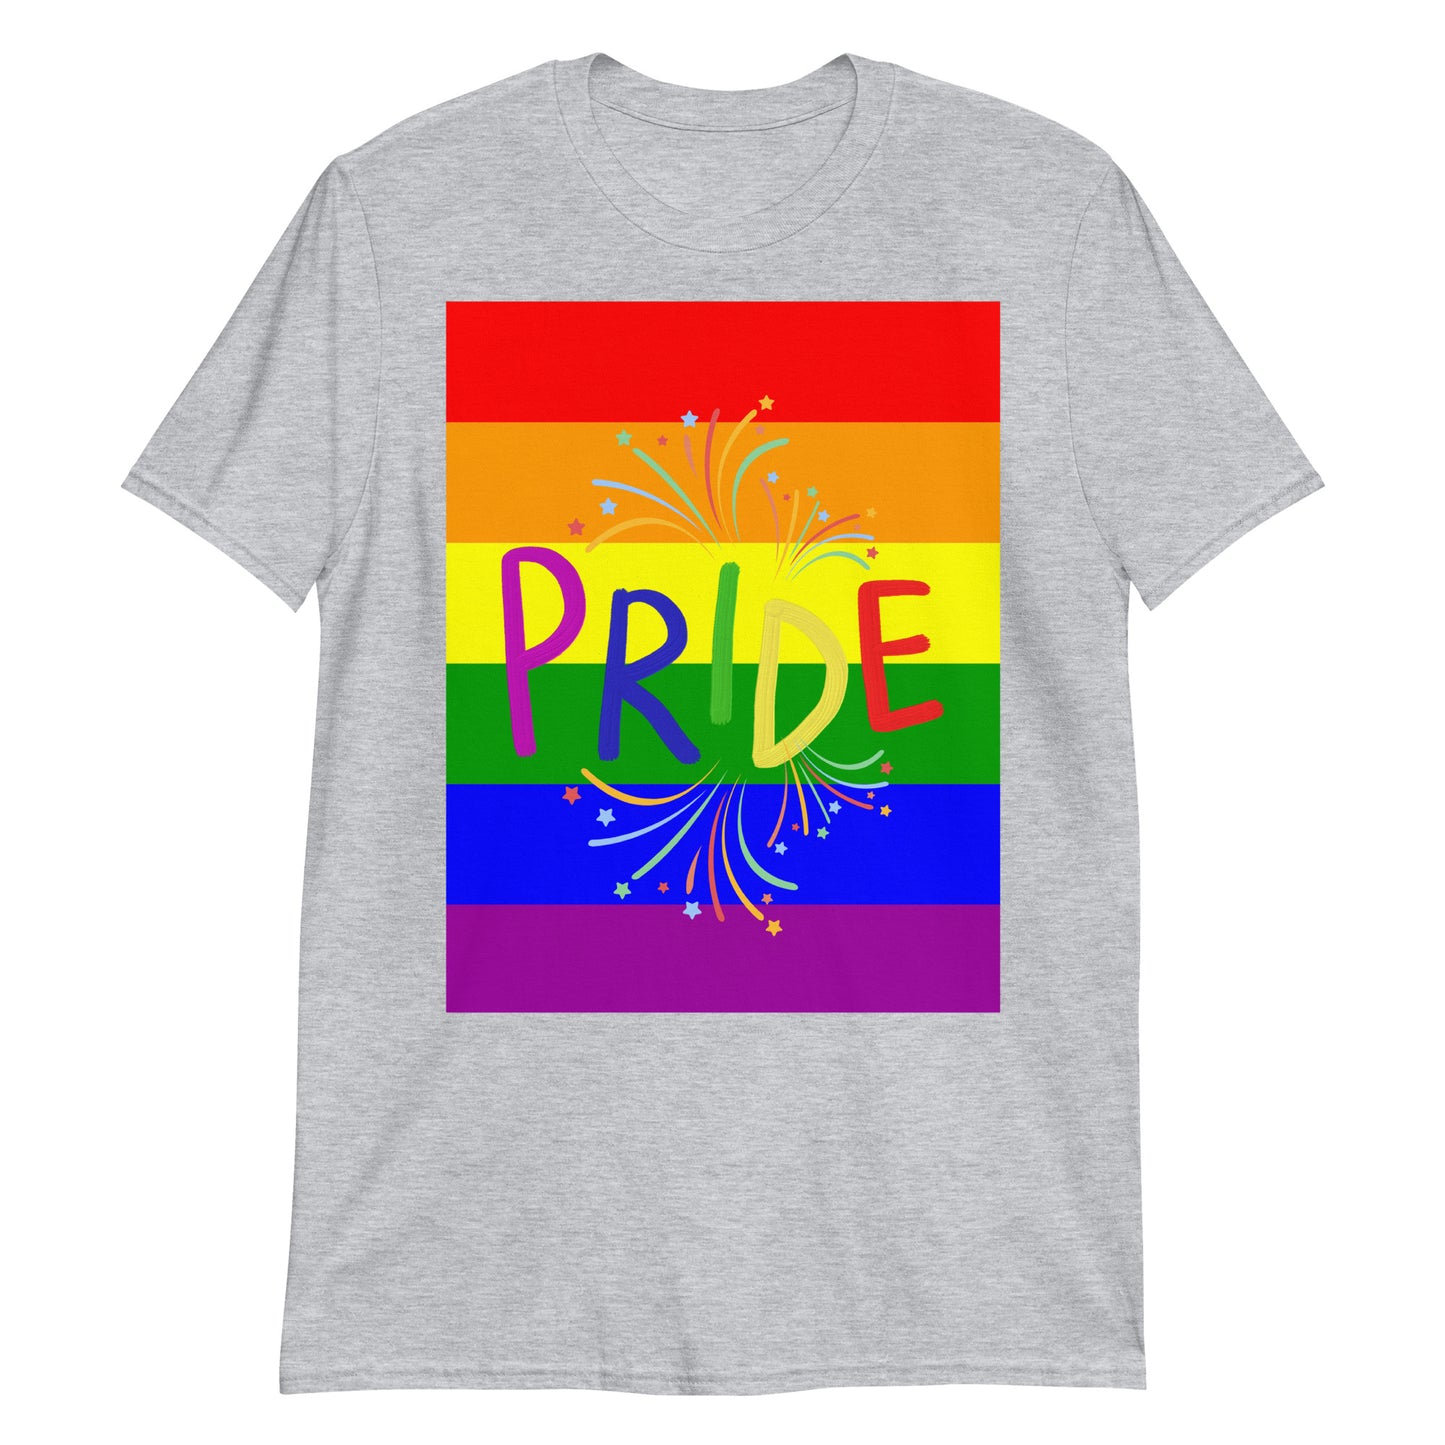 Short-Sleeve Pride T-Shirt